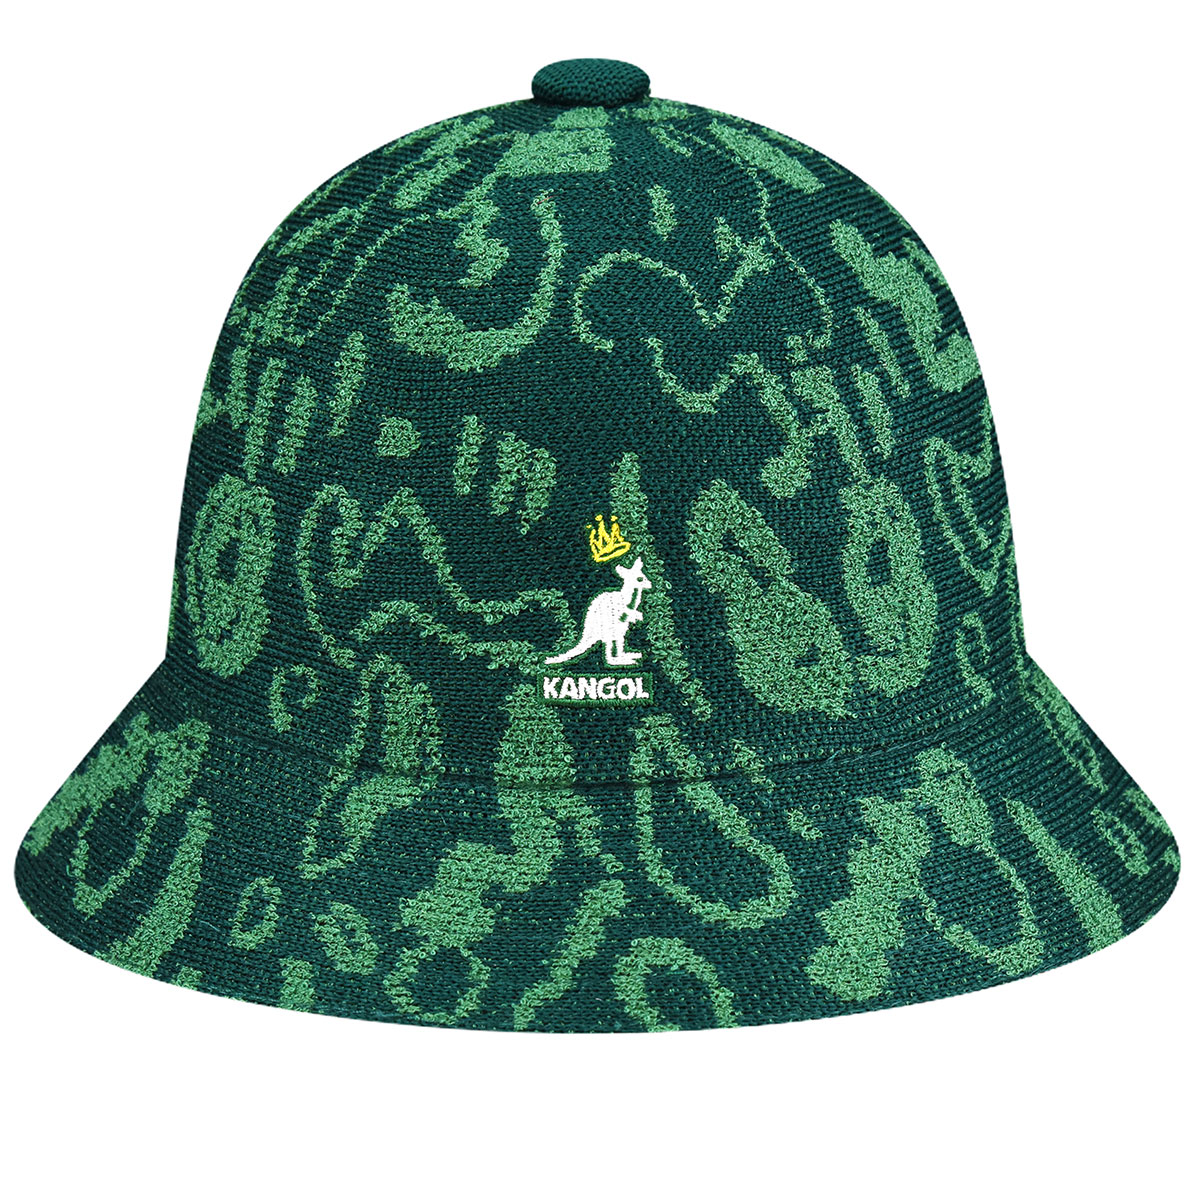 Hats - Turf Green/Masters Green